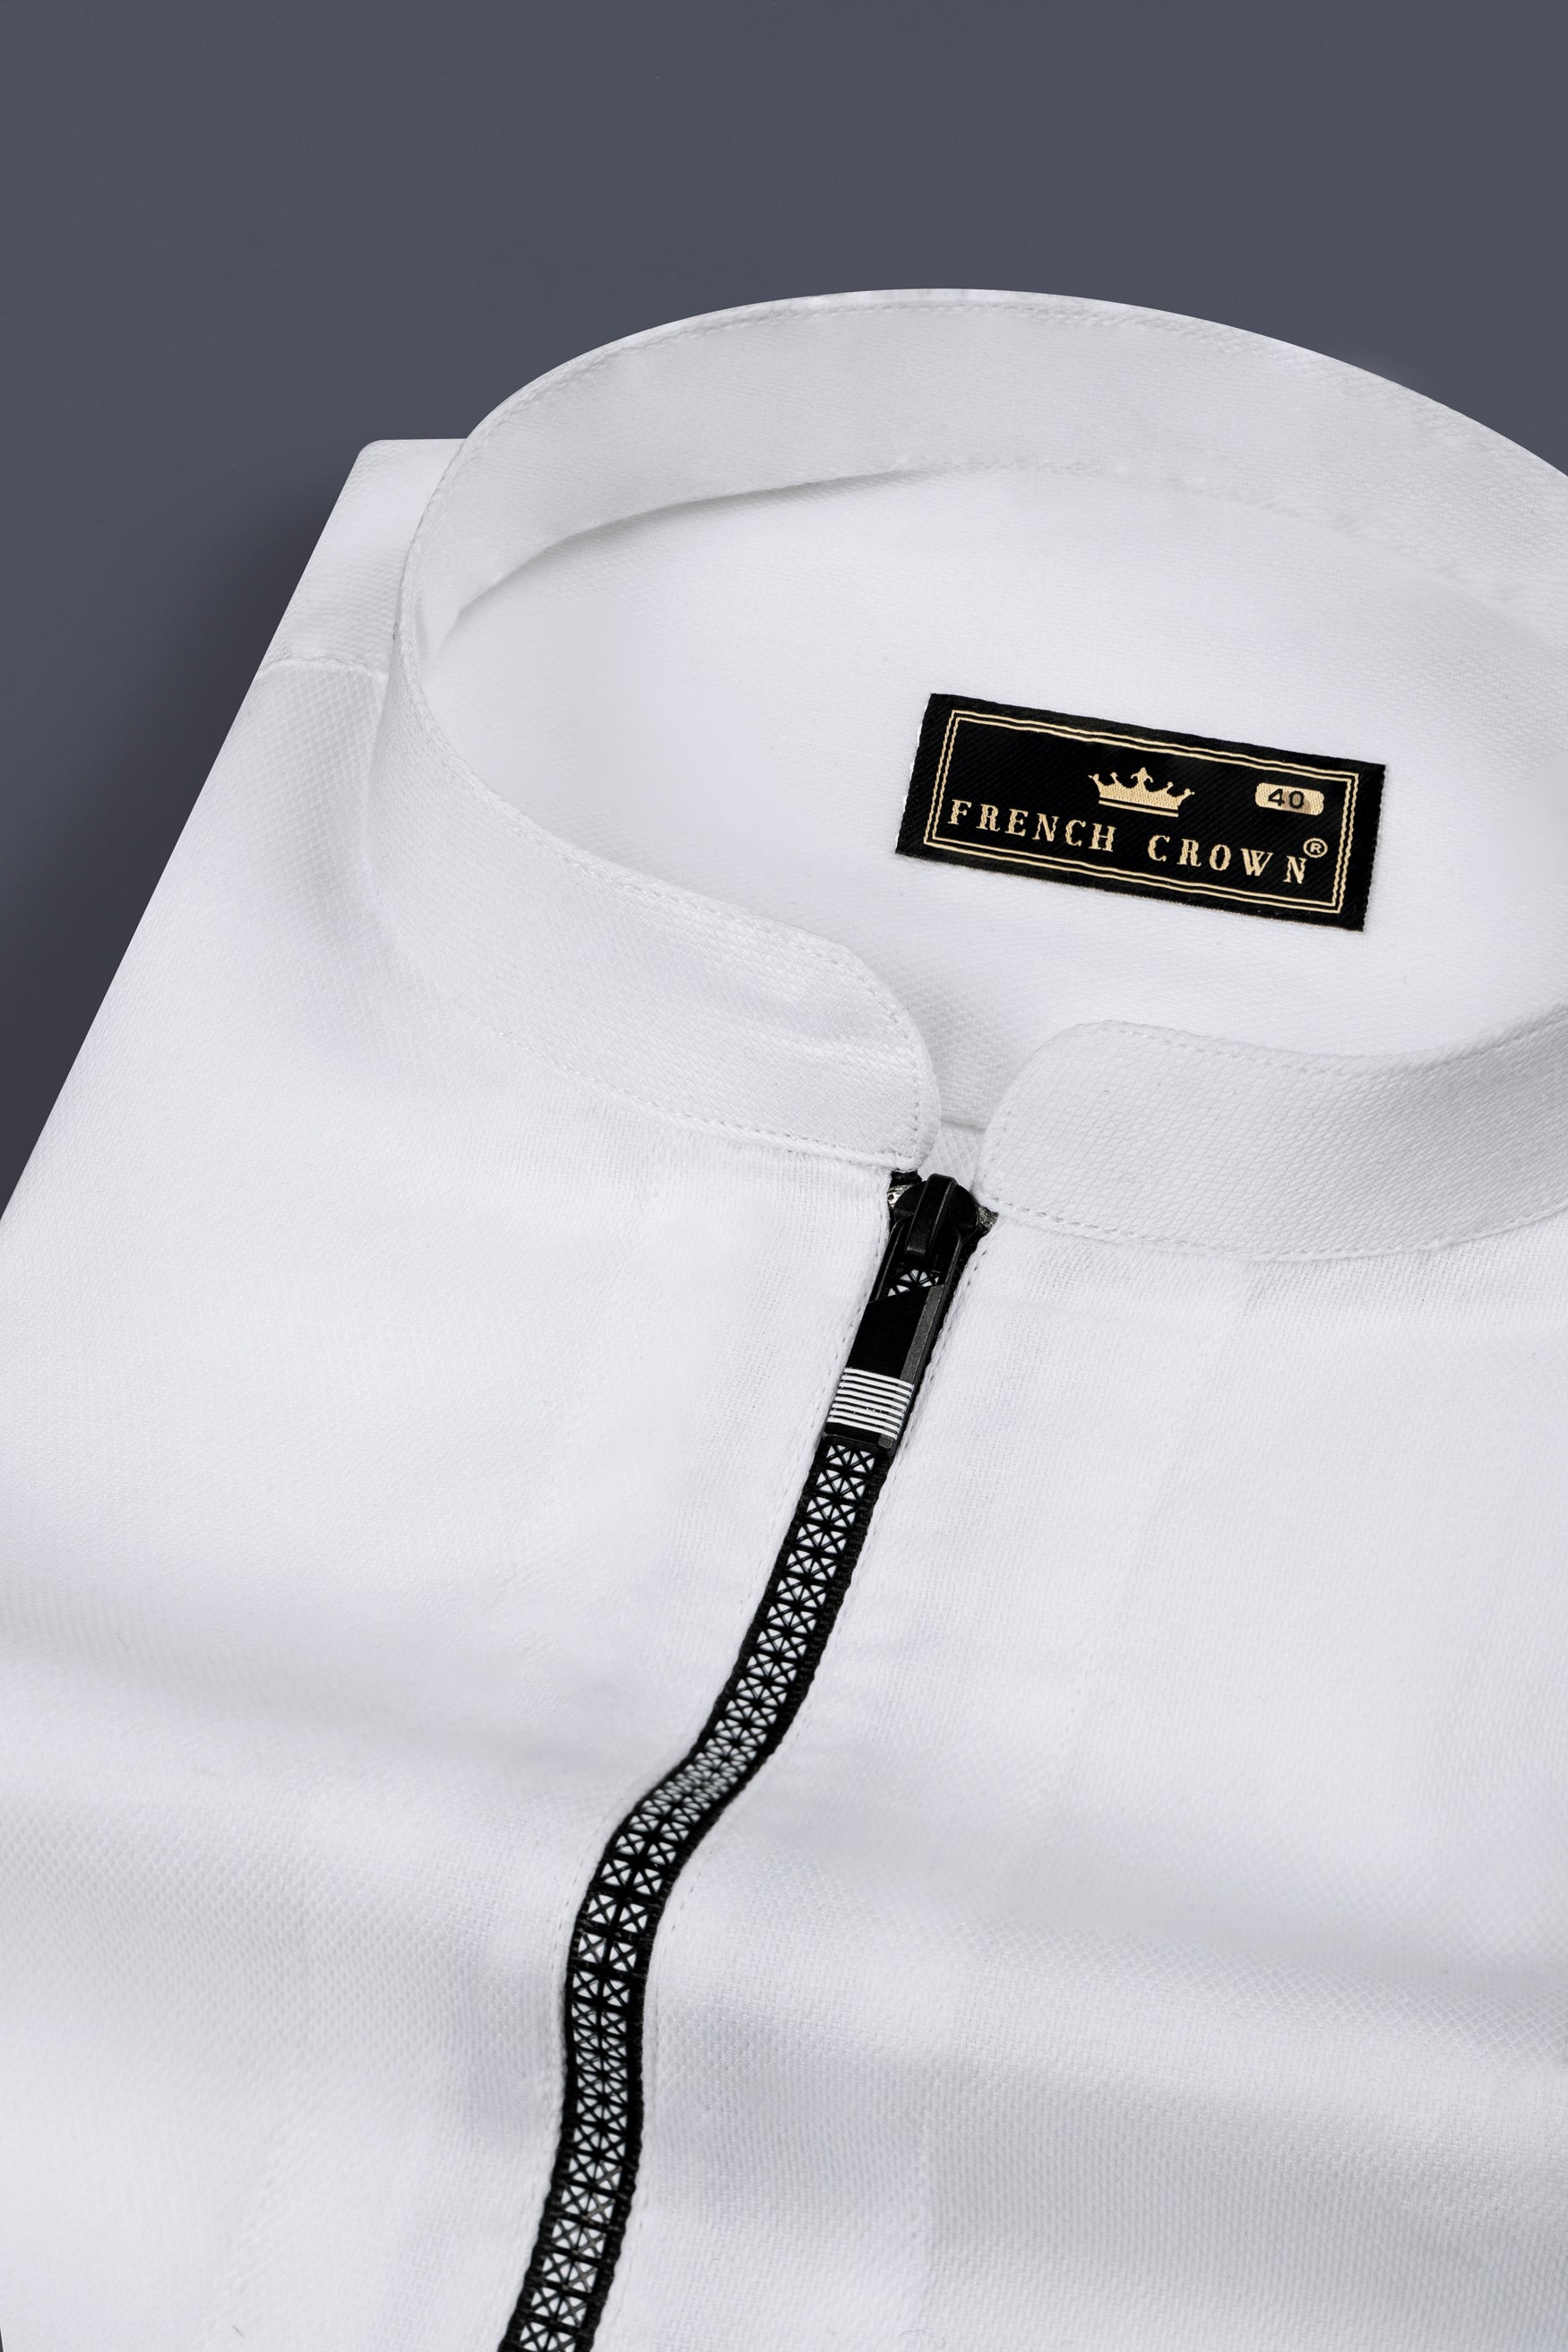 Bright White Dobby Textured Premium Giza Cotton Shirt With Zipper Closure